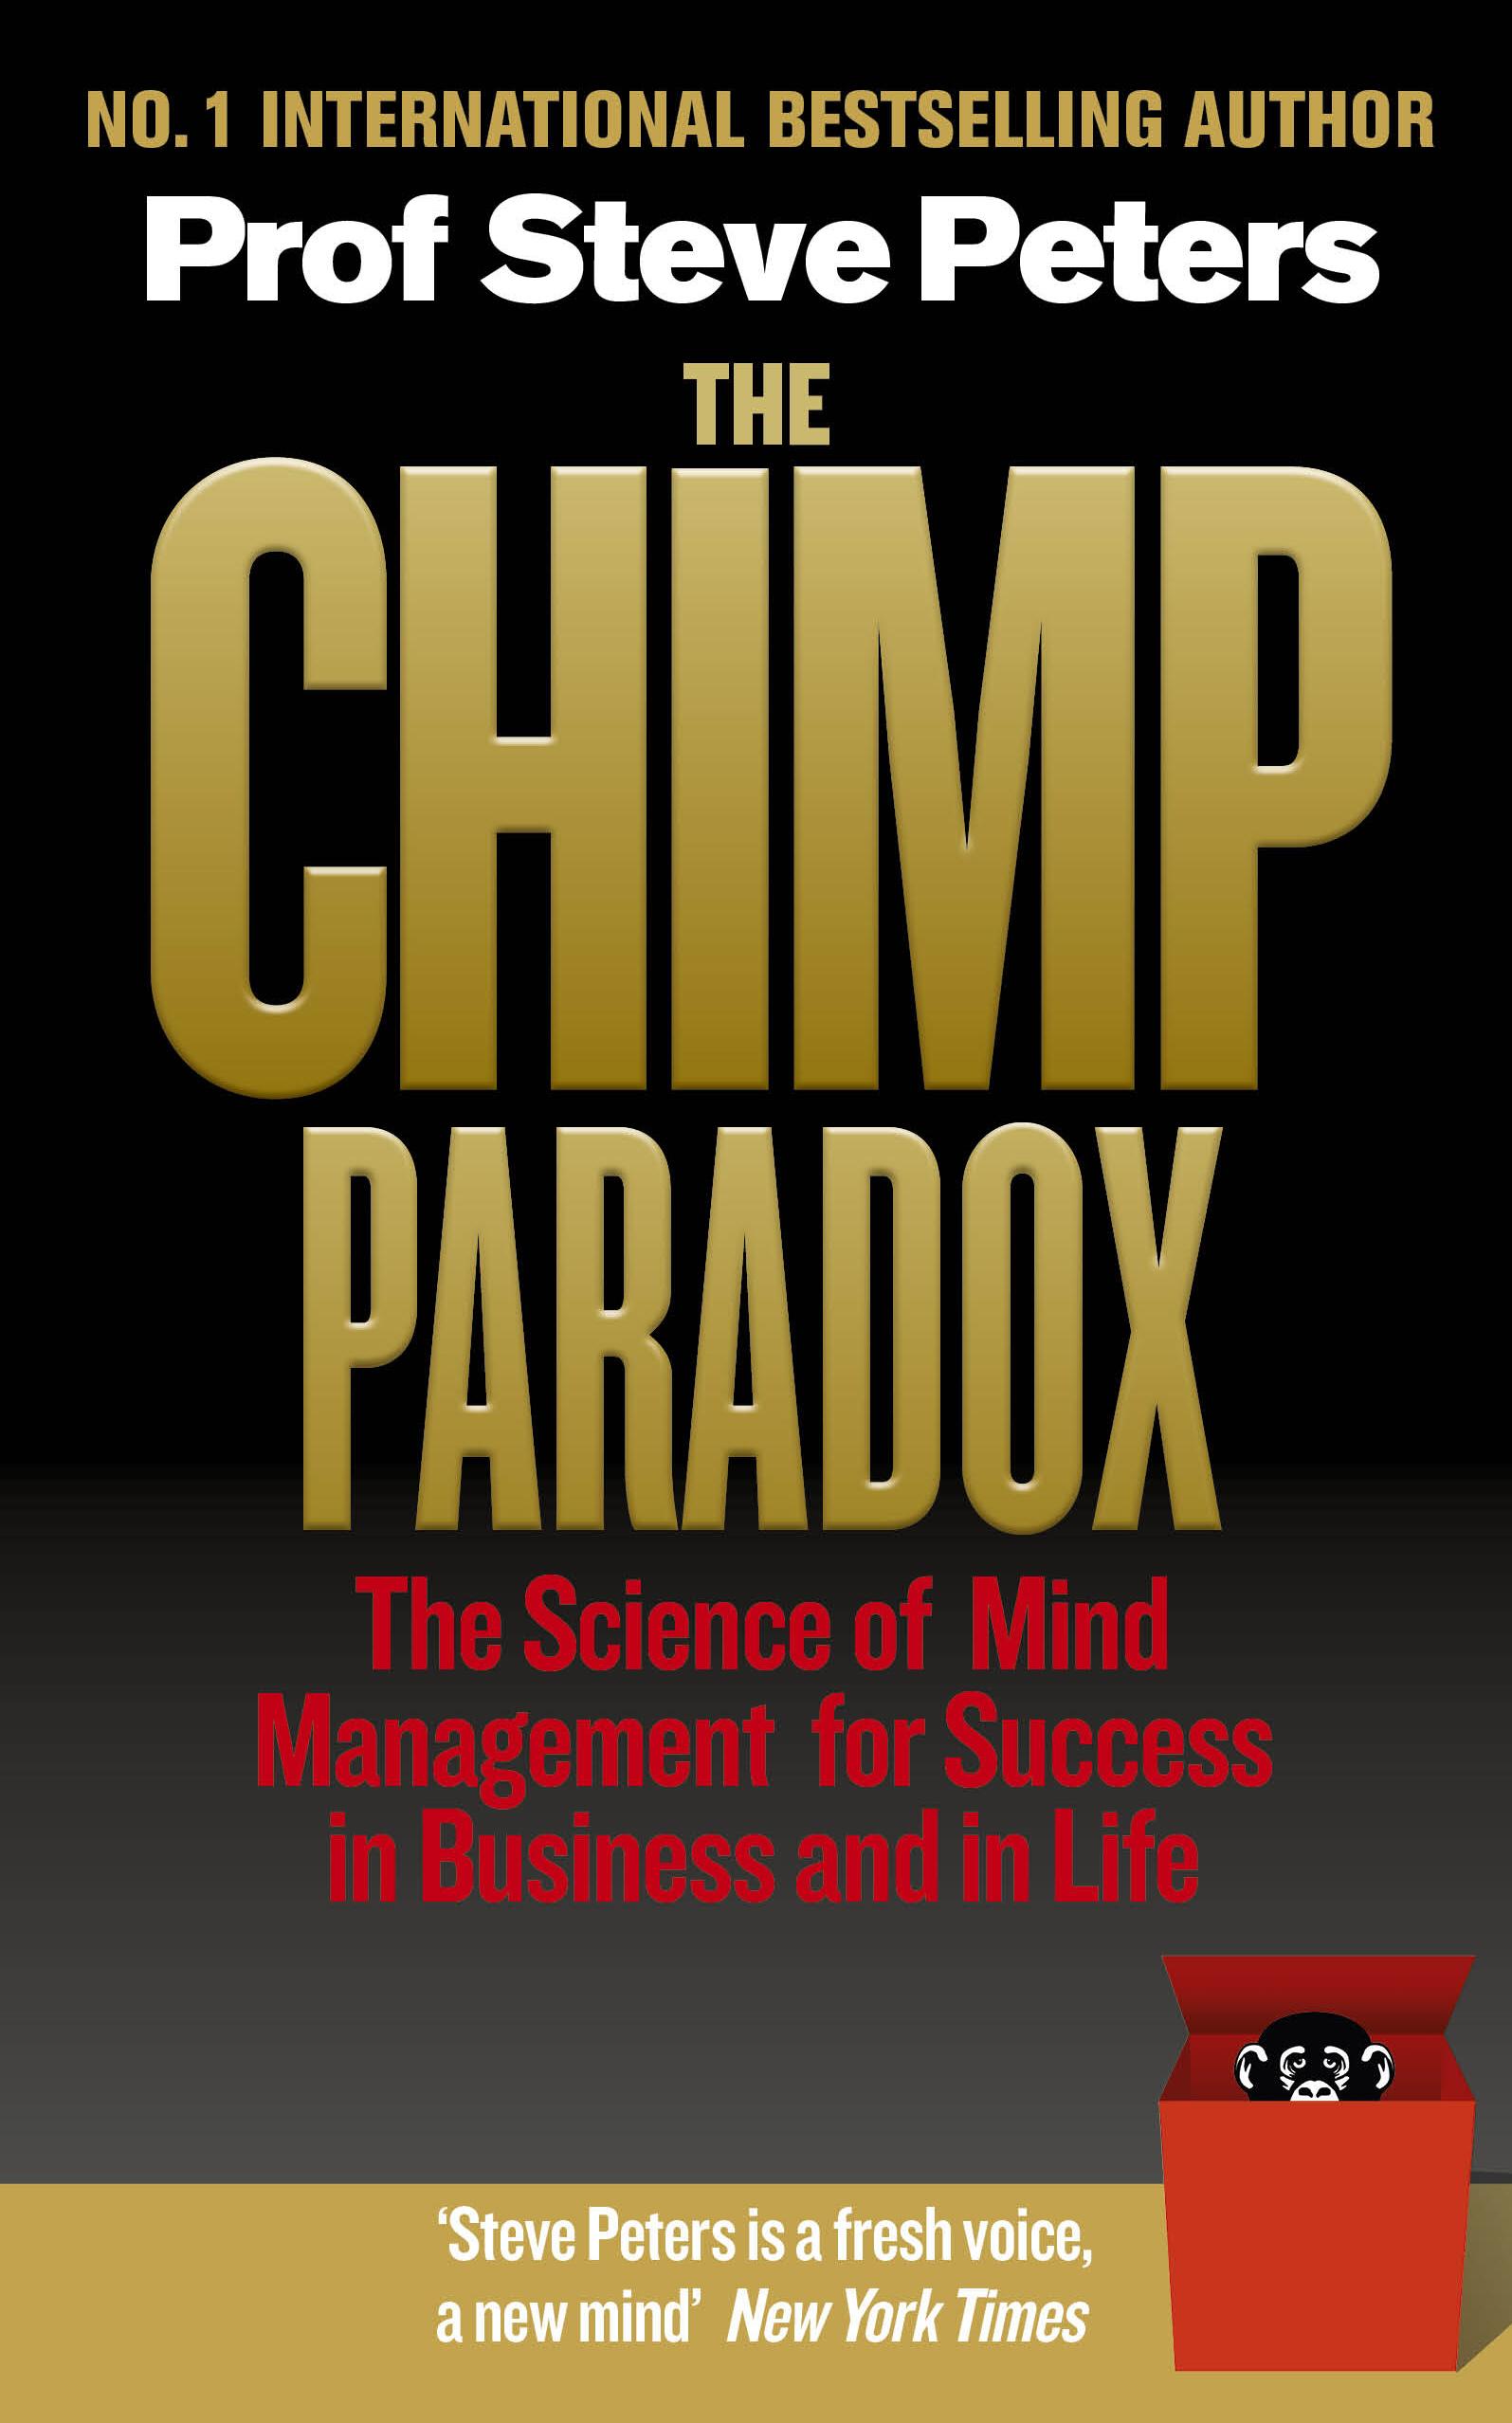 Chimp Paradox - Professor Steve Peters